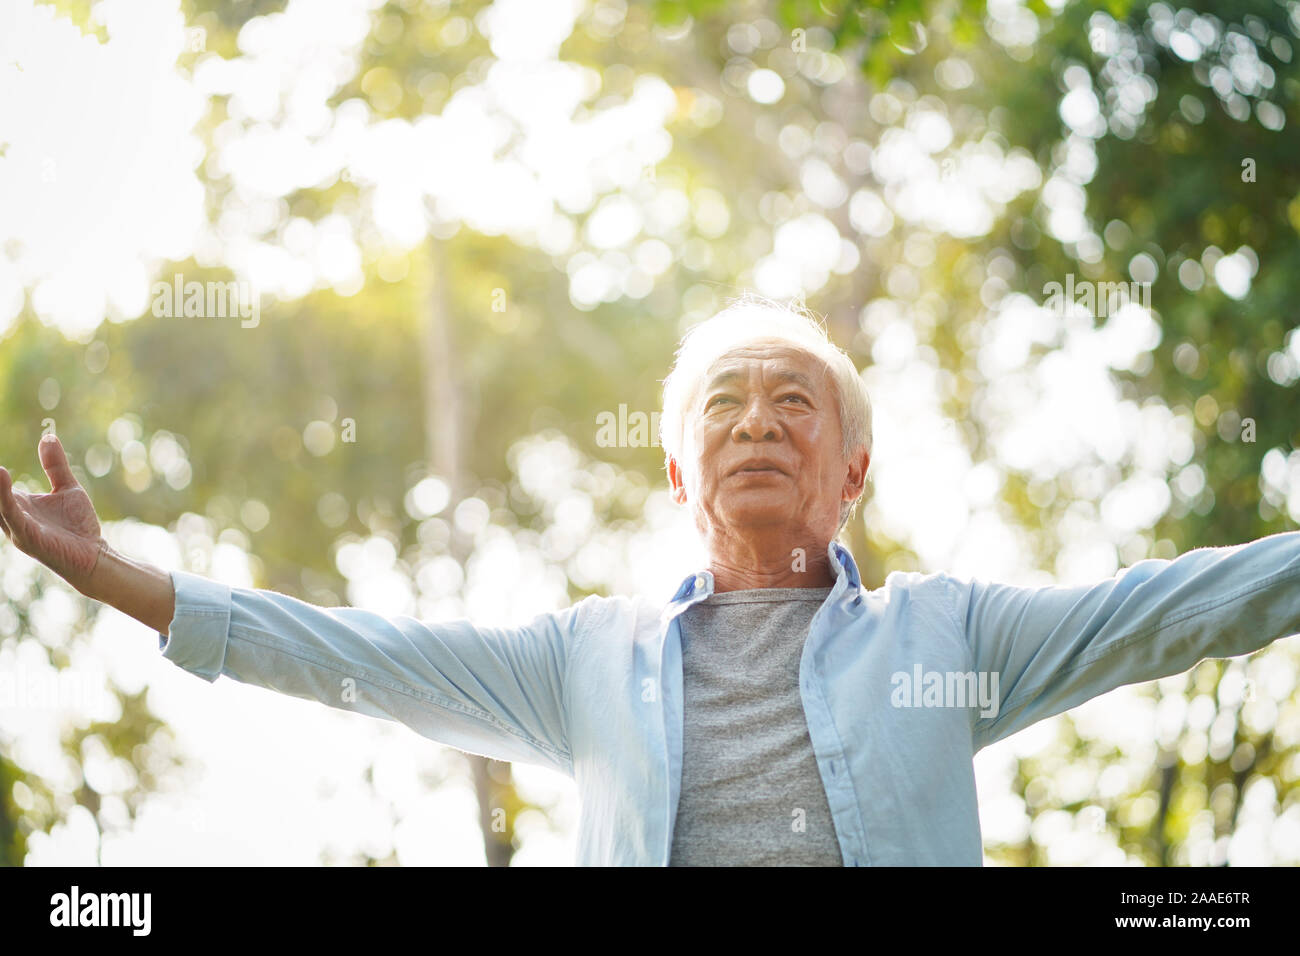 senior asian man enjoying fresh air walking with open arms outdoors in park Stock Photo